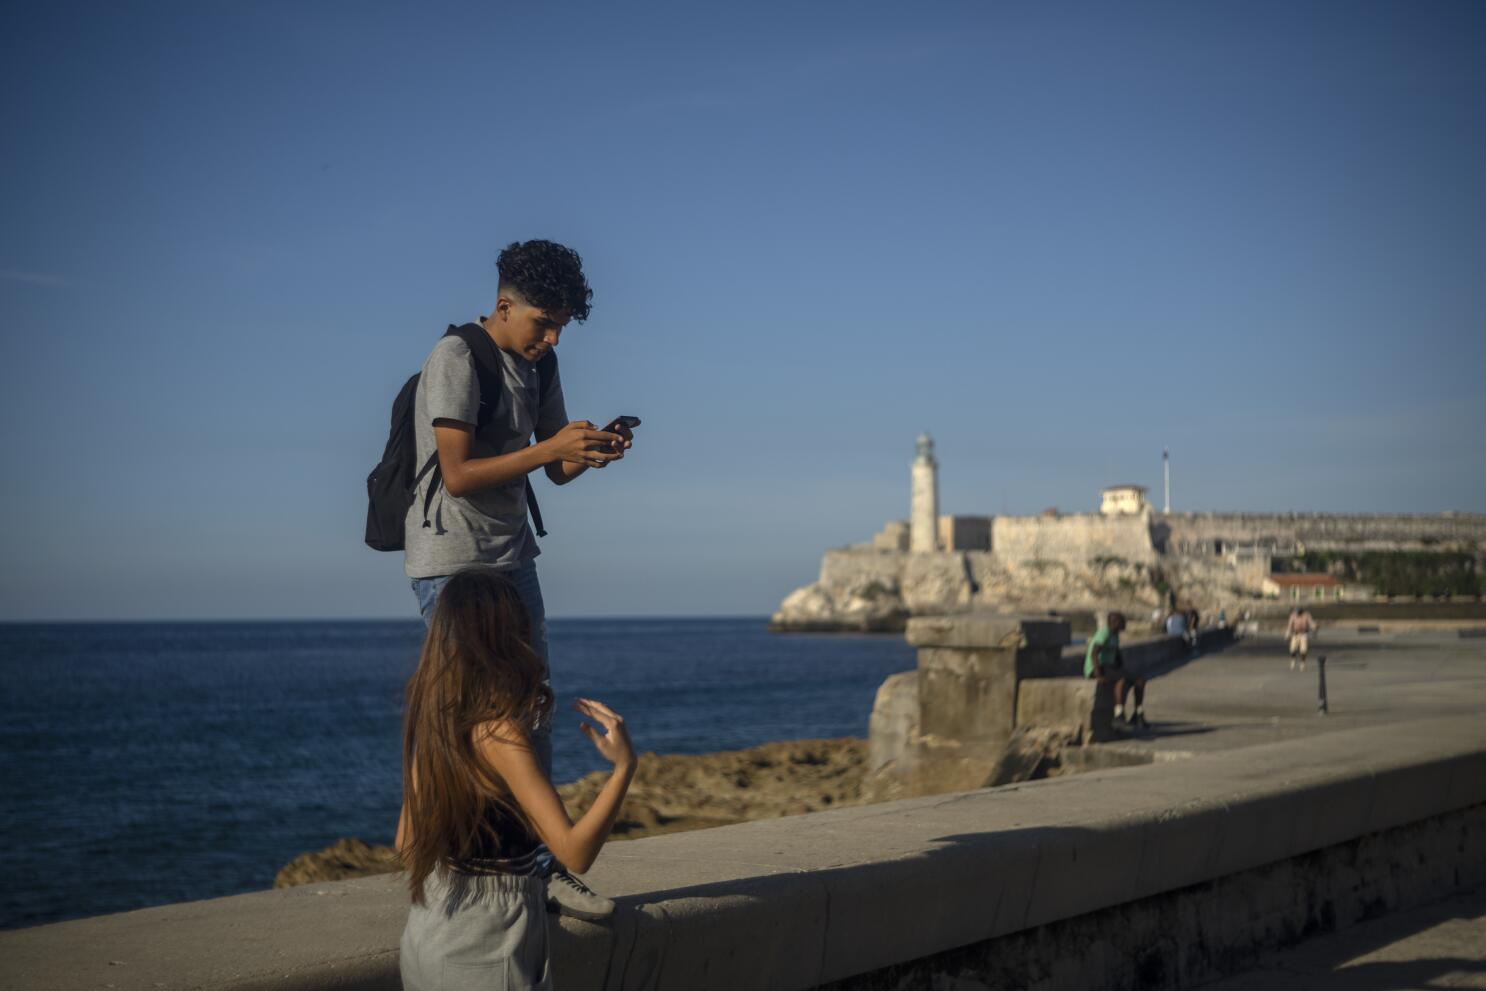 Cuba's black market finds new space as internet access grows - Los